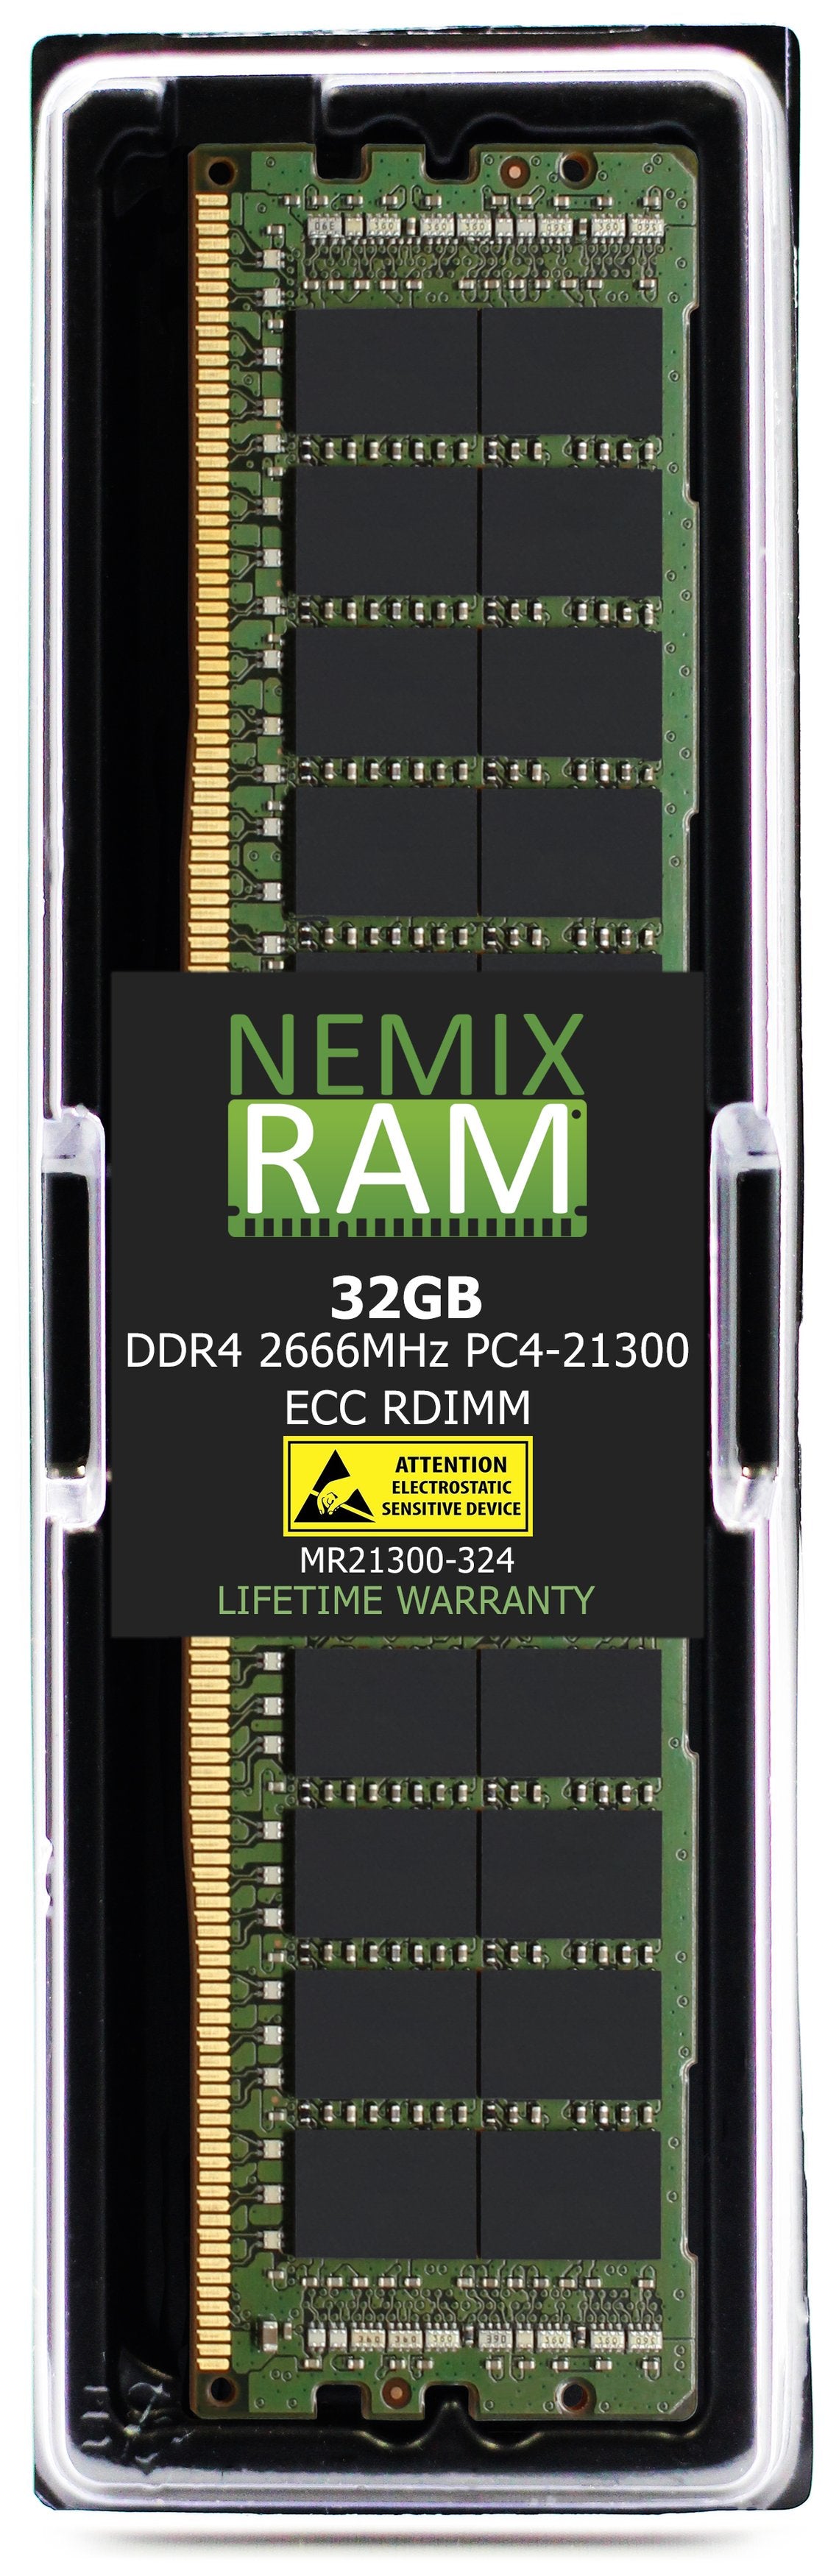 32GB DDR4 2666MHZ PC4-21300 RDIMM Compatible with Supermicro MEM-DR432L-SL04-ER26